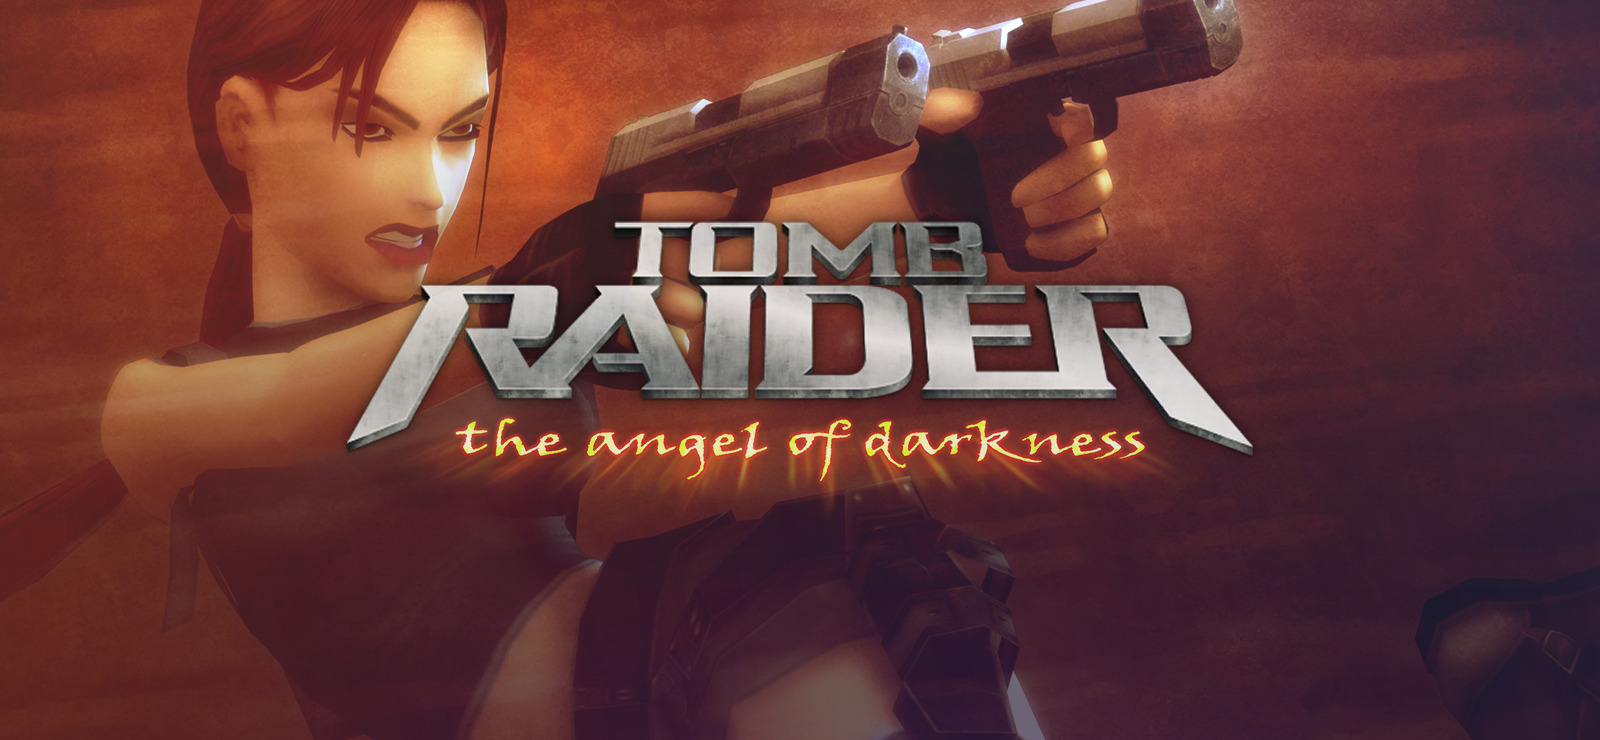 tomb raider angel of darkness cinematic movie